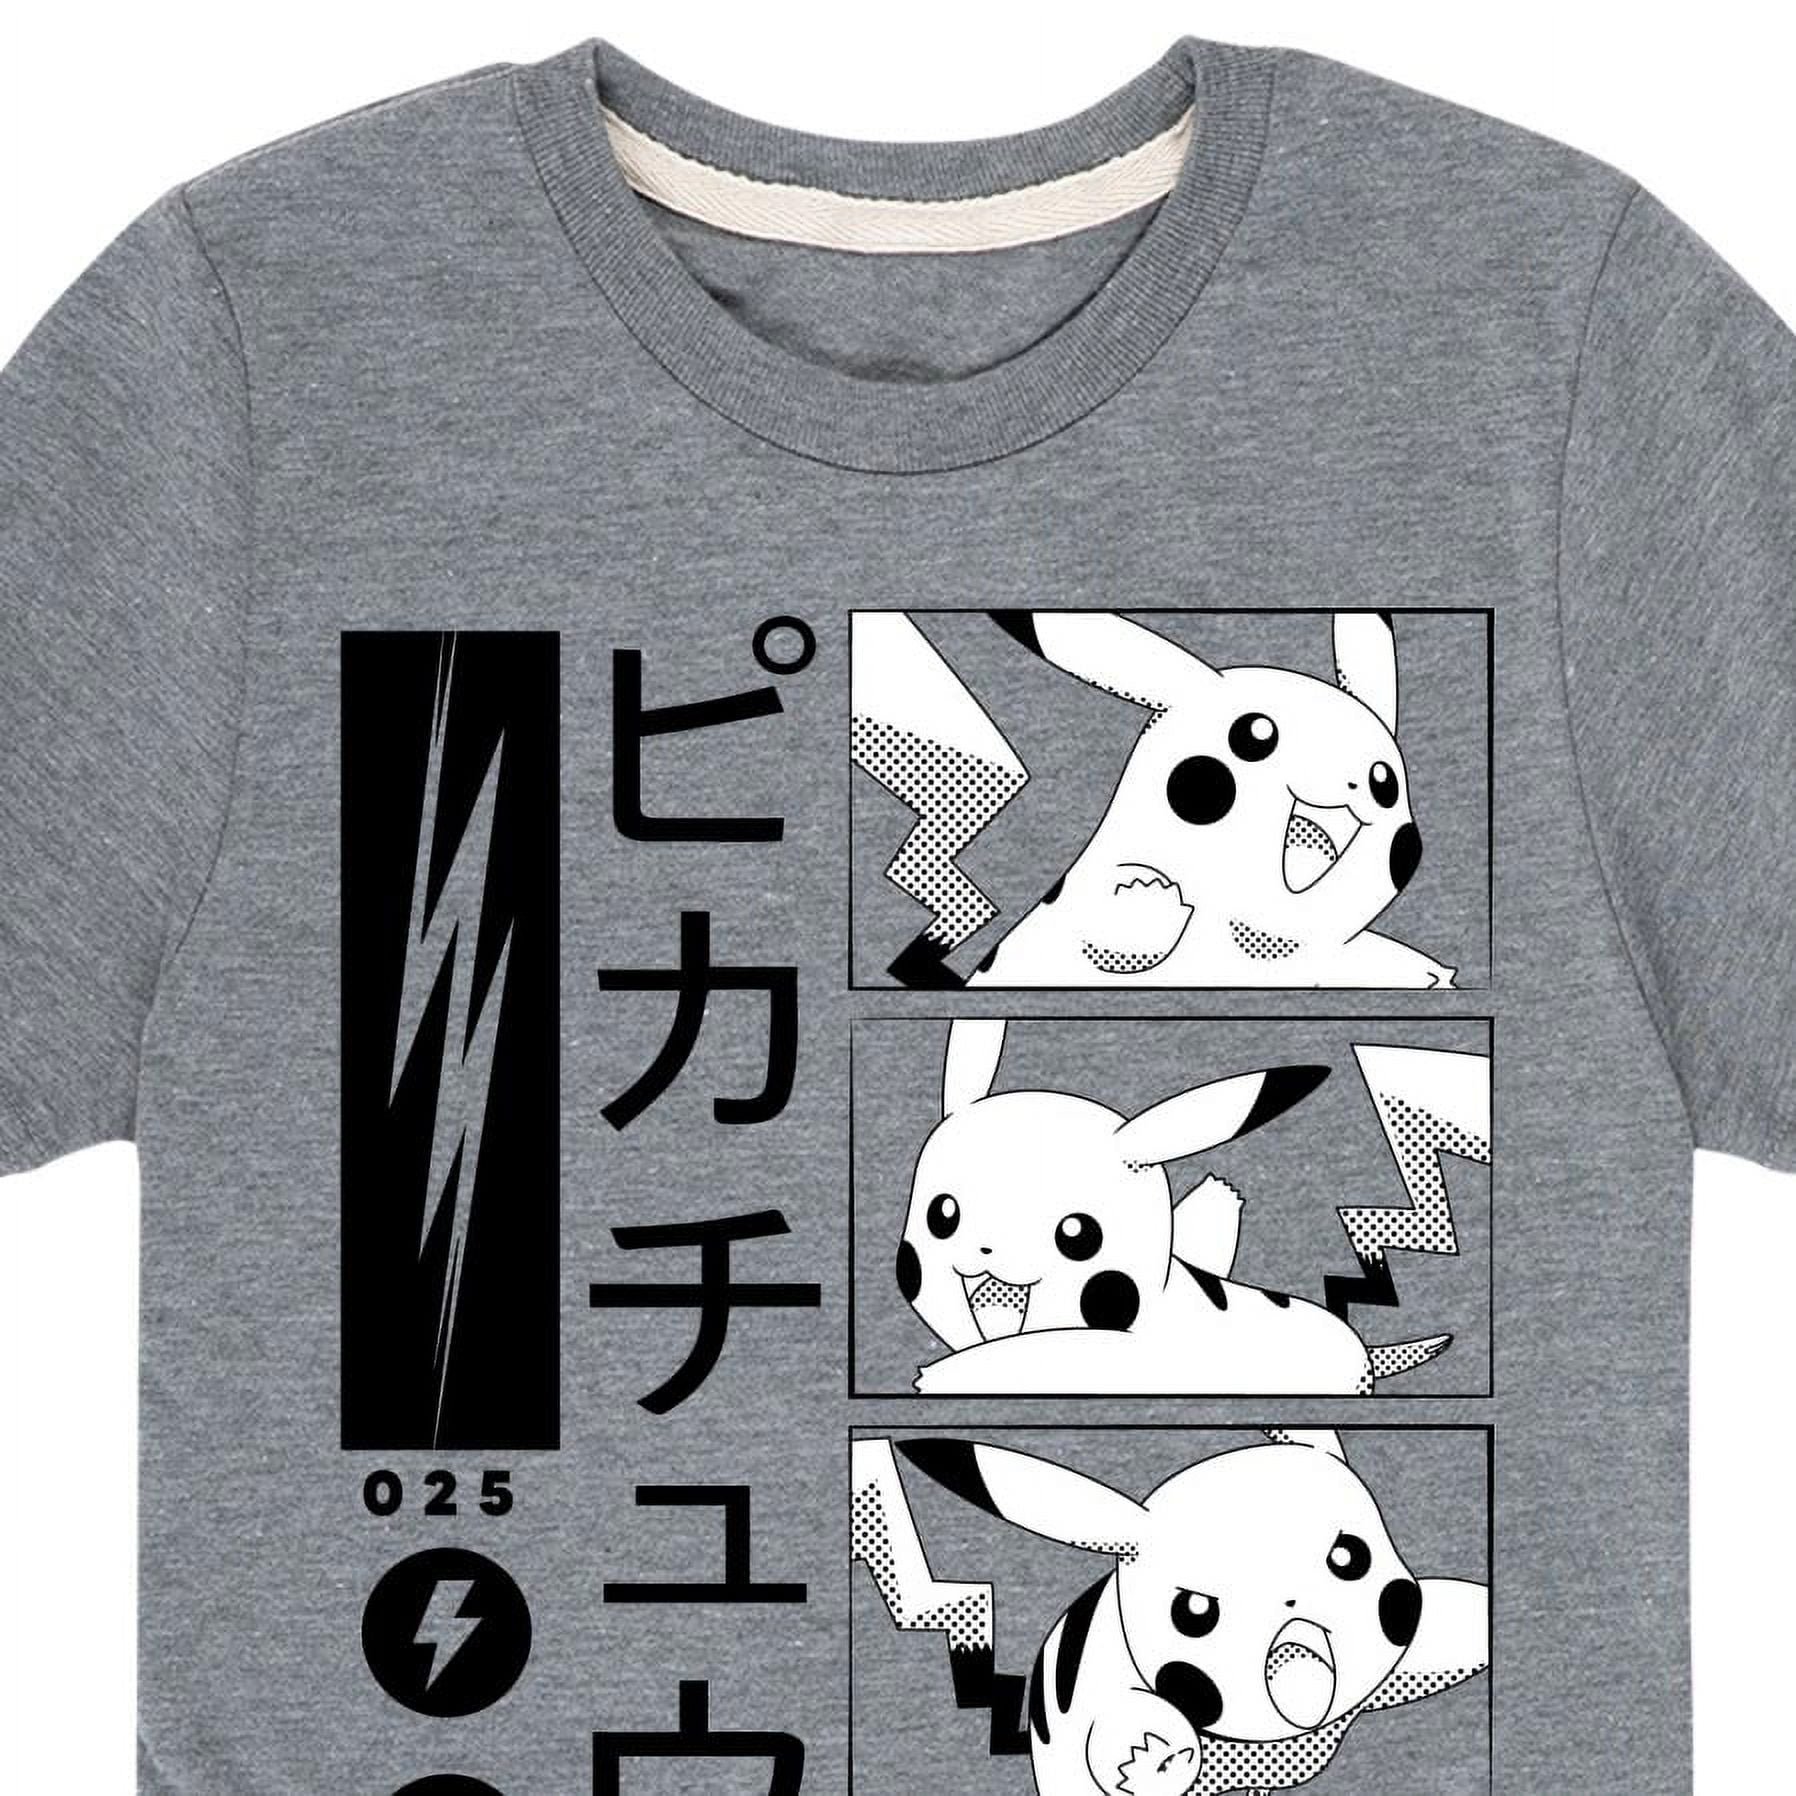  Pokemon Men's Pokémon Pikachu Japanese Puzzle Power T-Shirt,  White, Small : Clothing, Shoes & Jewelry